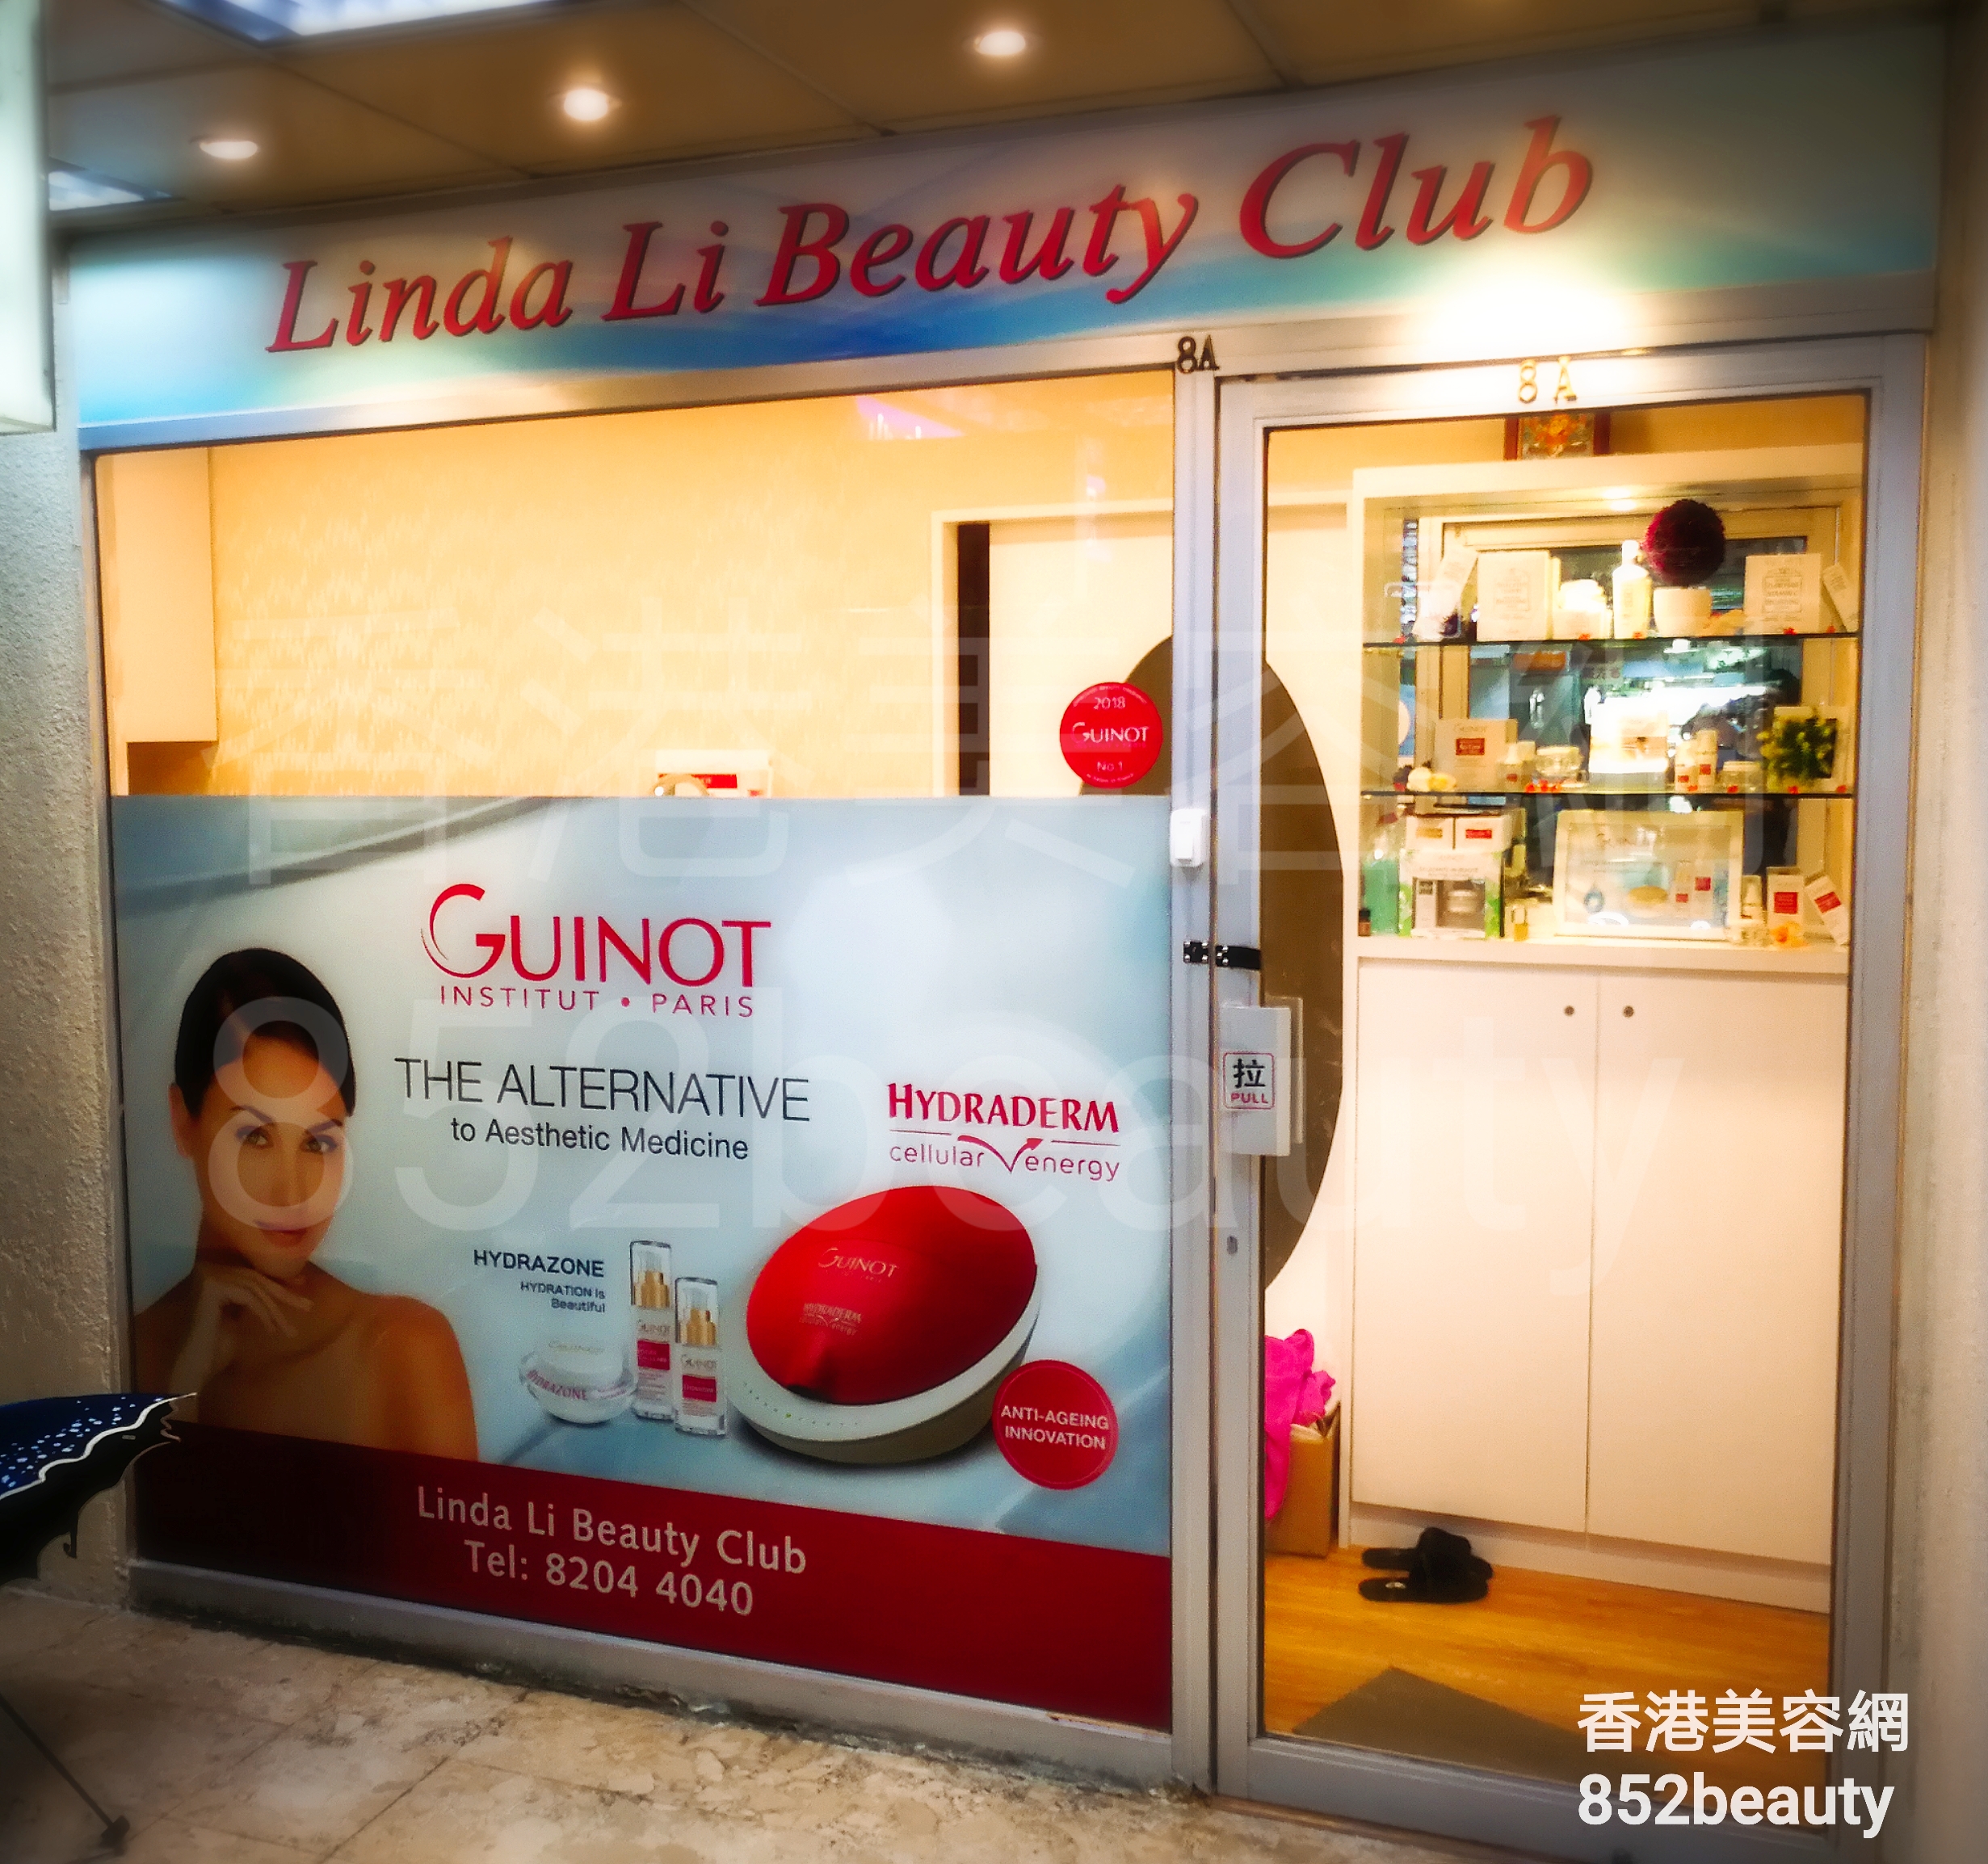 Eye Care: Linda Li Beauty Club